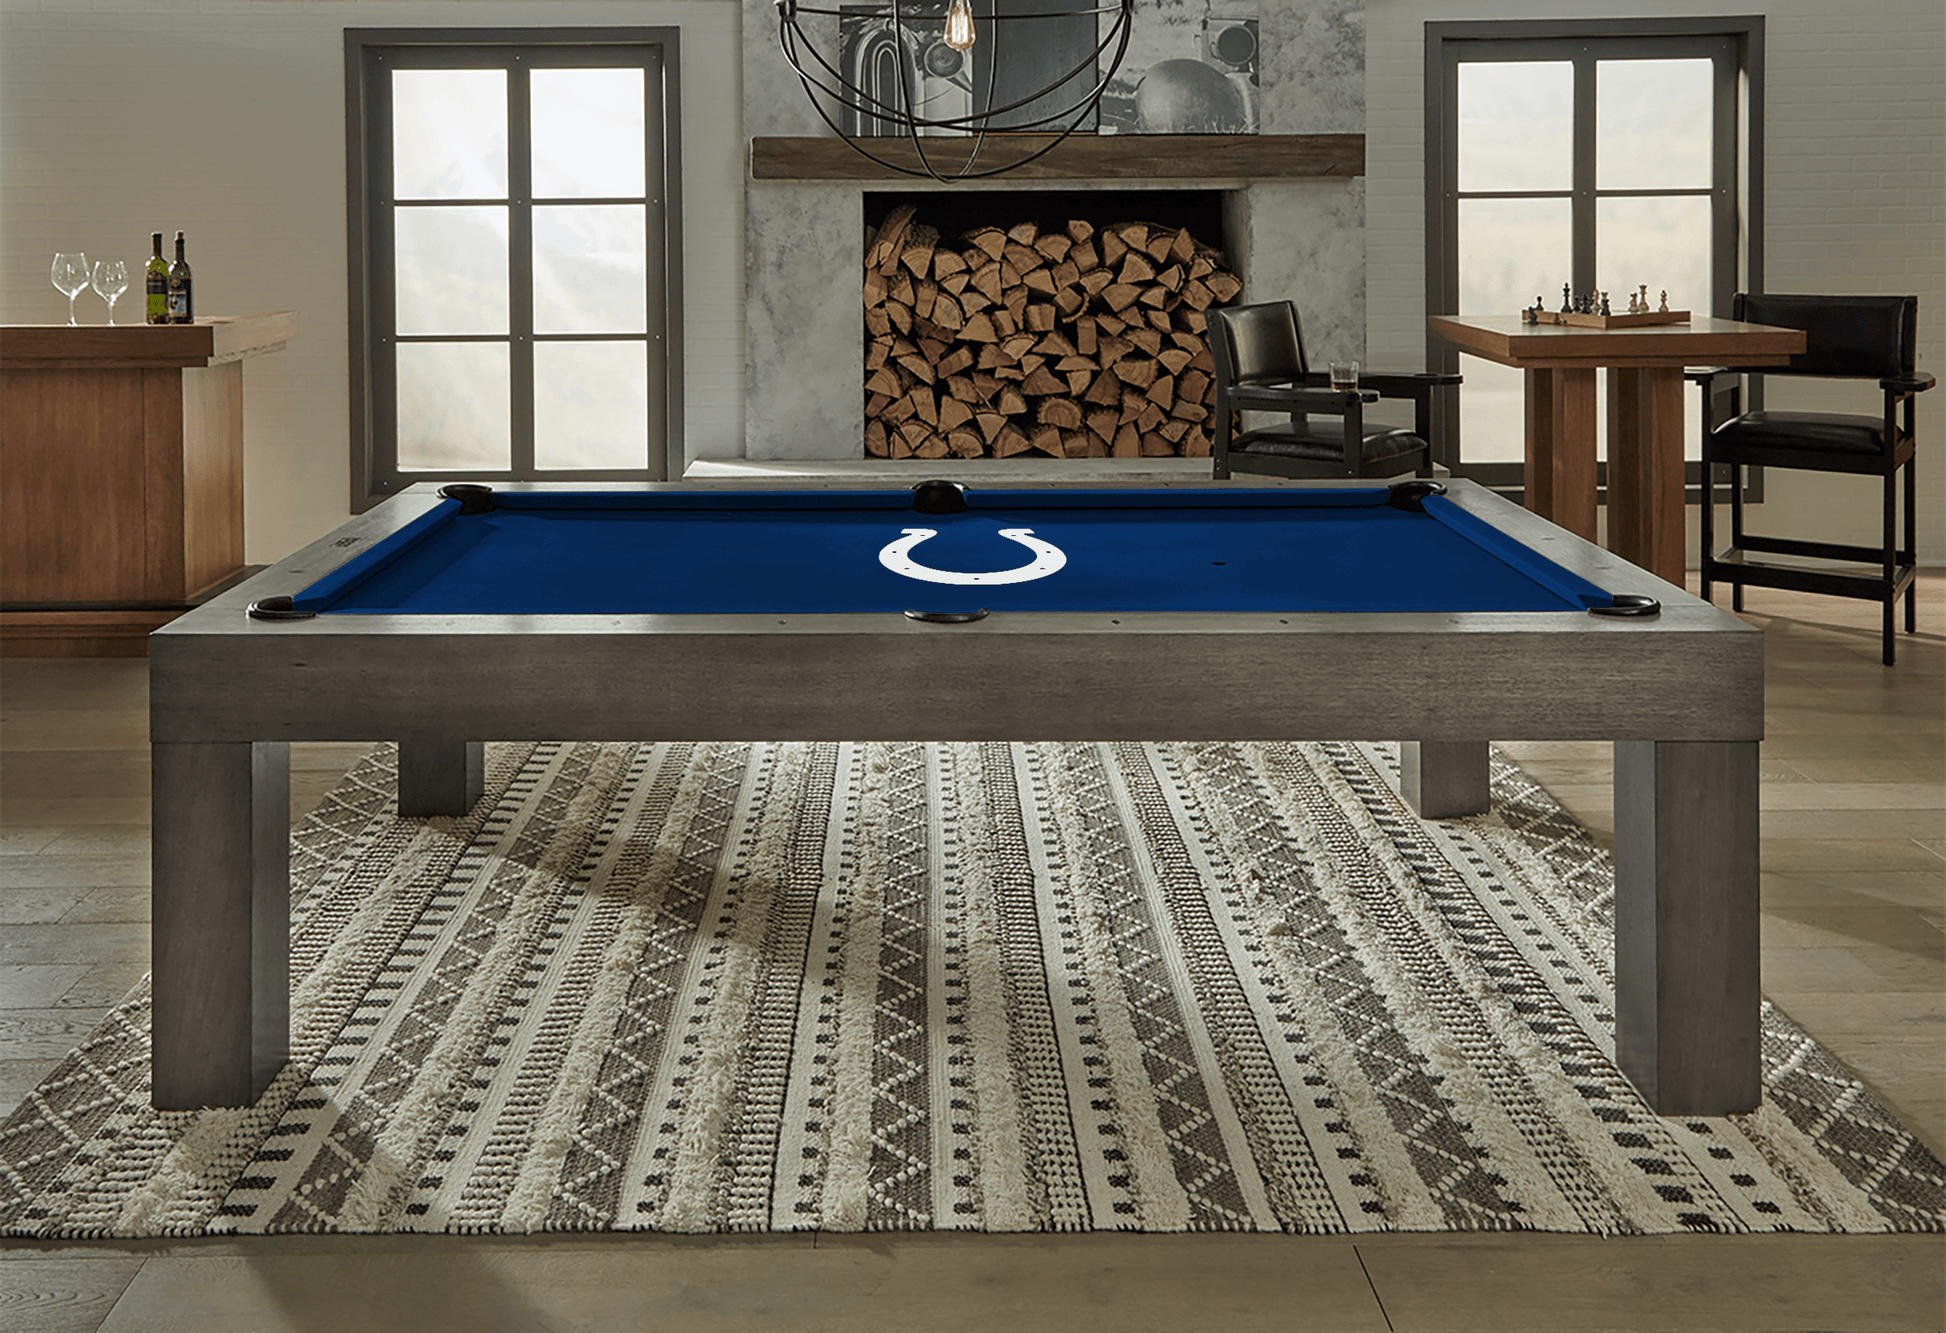 Indianapolis Colts Premium Pool Table Bundle - Walnut Pool Bundle Home Arcade Games   